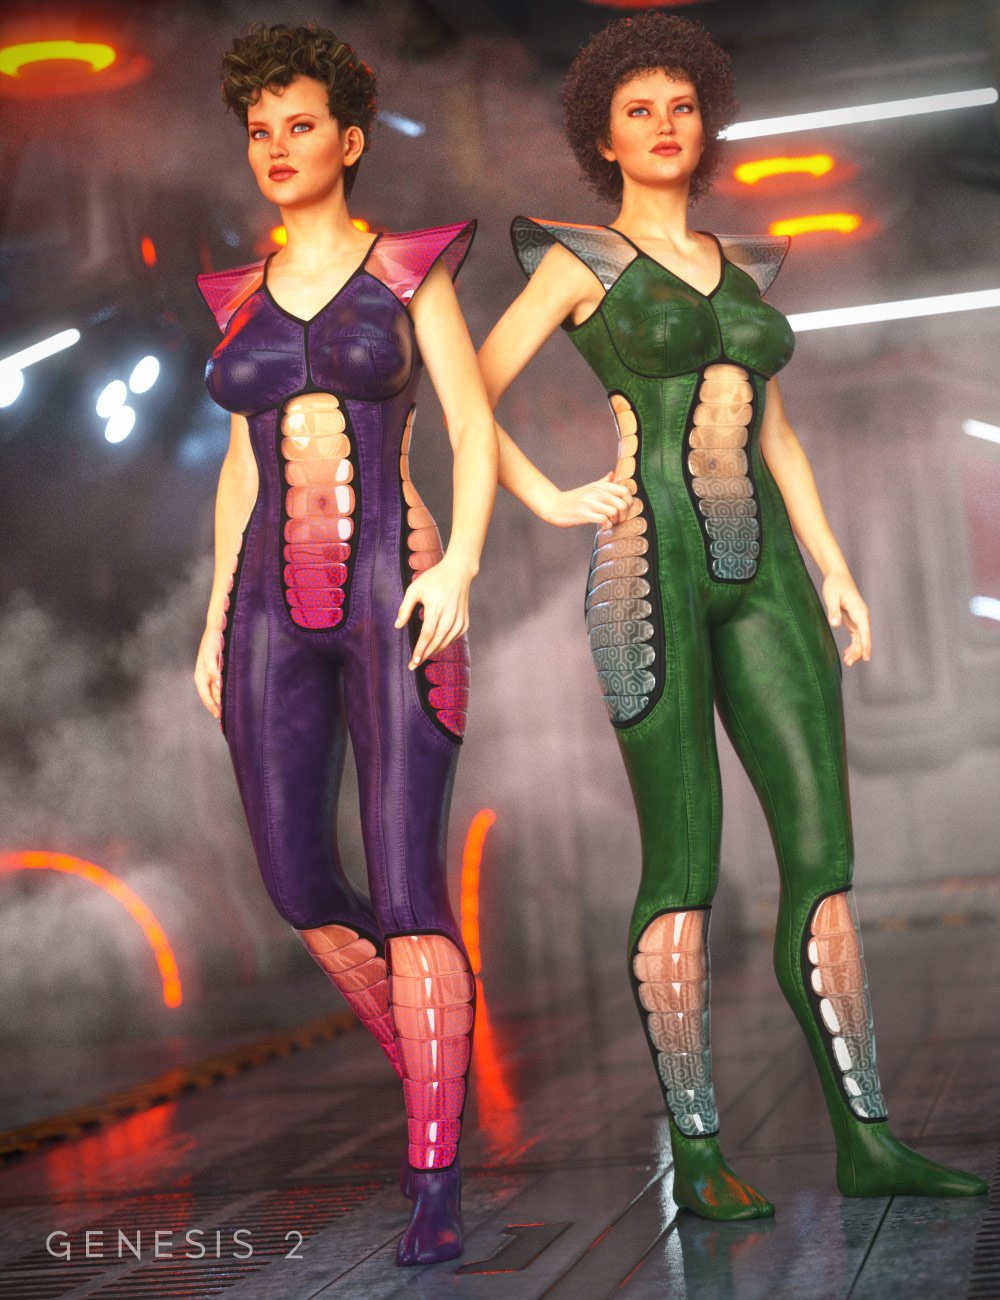 Retro SciFi Bodysuit Textures by: DarkStarBurning, 3D Models by Daz 3D